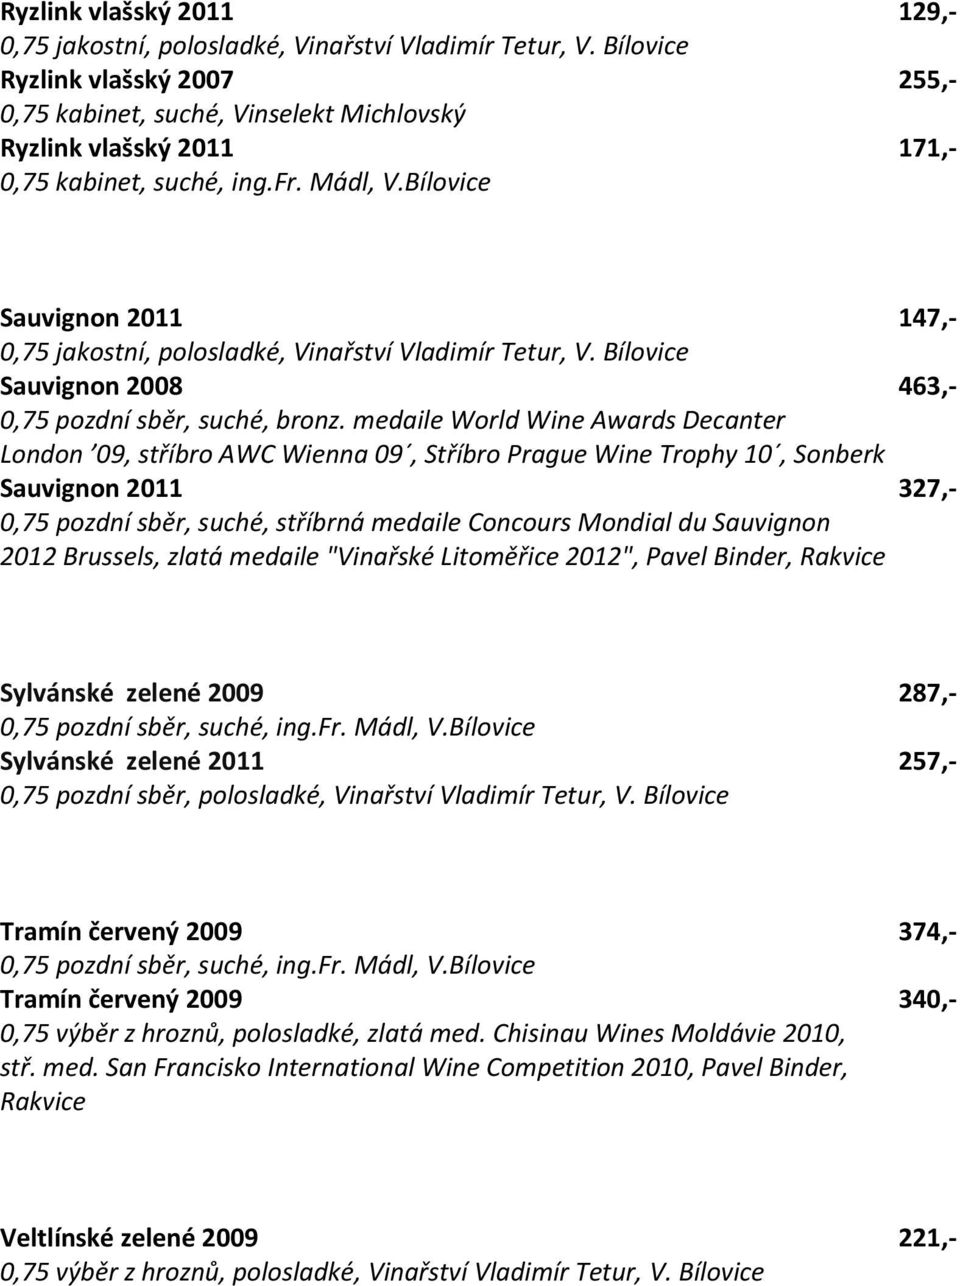 medaile World Wine Awards Decanter London 09, stříbro AWC Wienna 09, Stříbro Prague Wine Trophy 10, Sonberk Sauvignon 2011 327,- 0,75 pozdní sběr, suché, stříbrná medaile Concours Mondial du